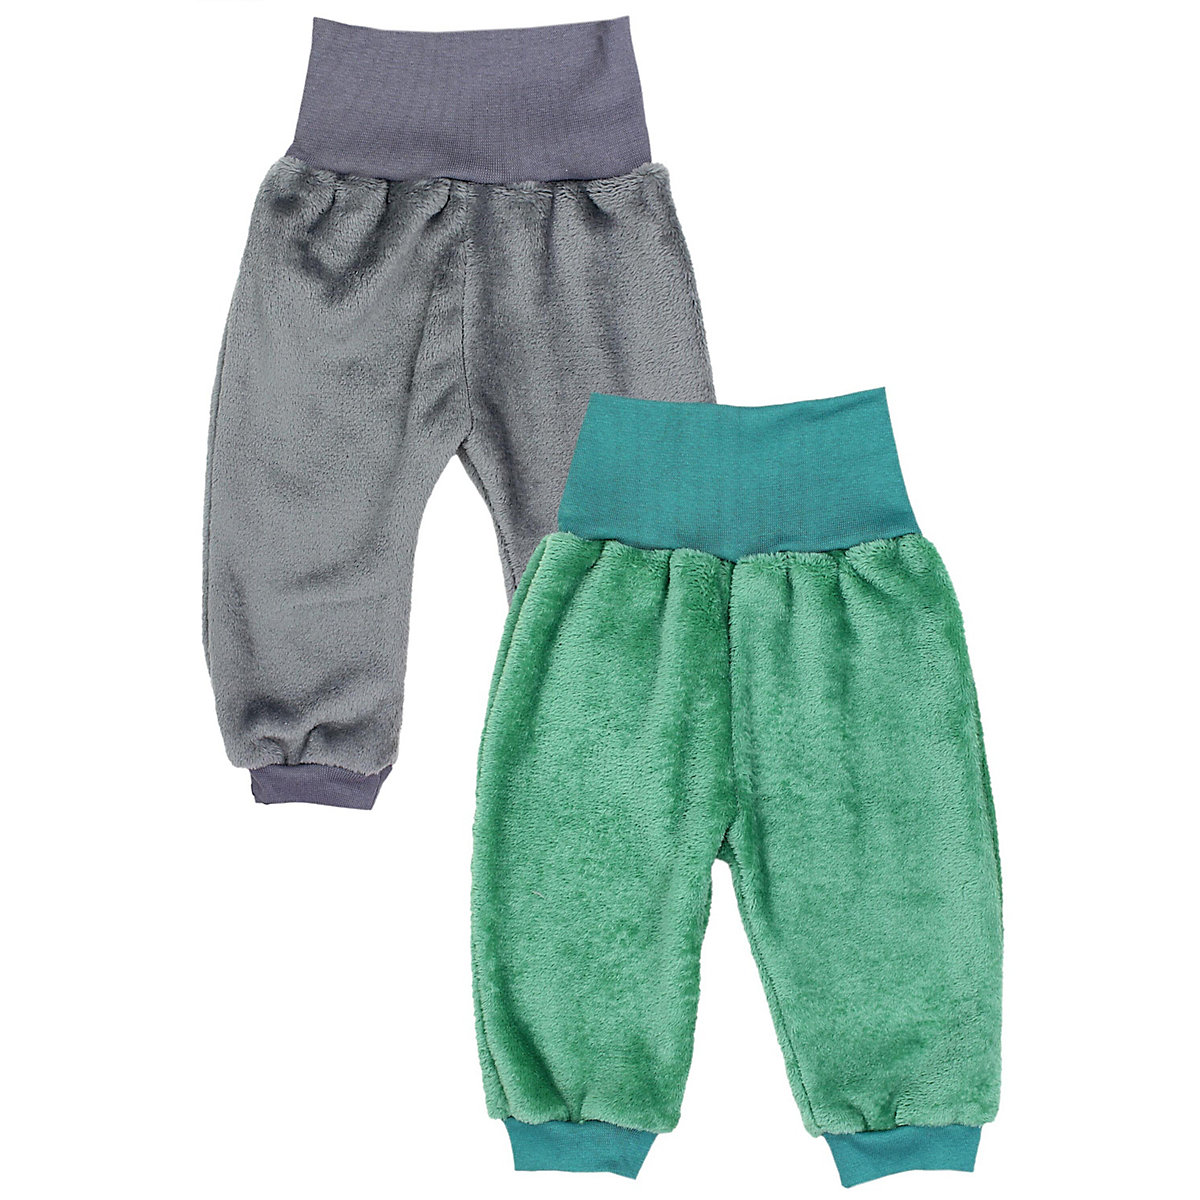 TupTam Baby Unisex Fleece Hose Babyhose Jogginghose Winter Warm für Kinder grau/grün